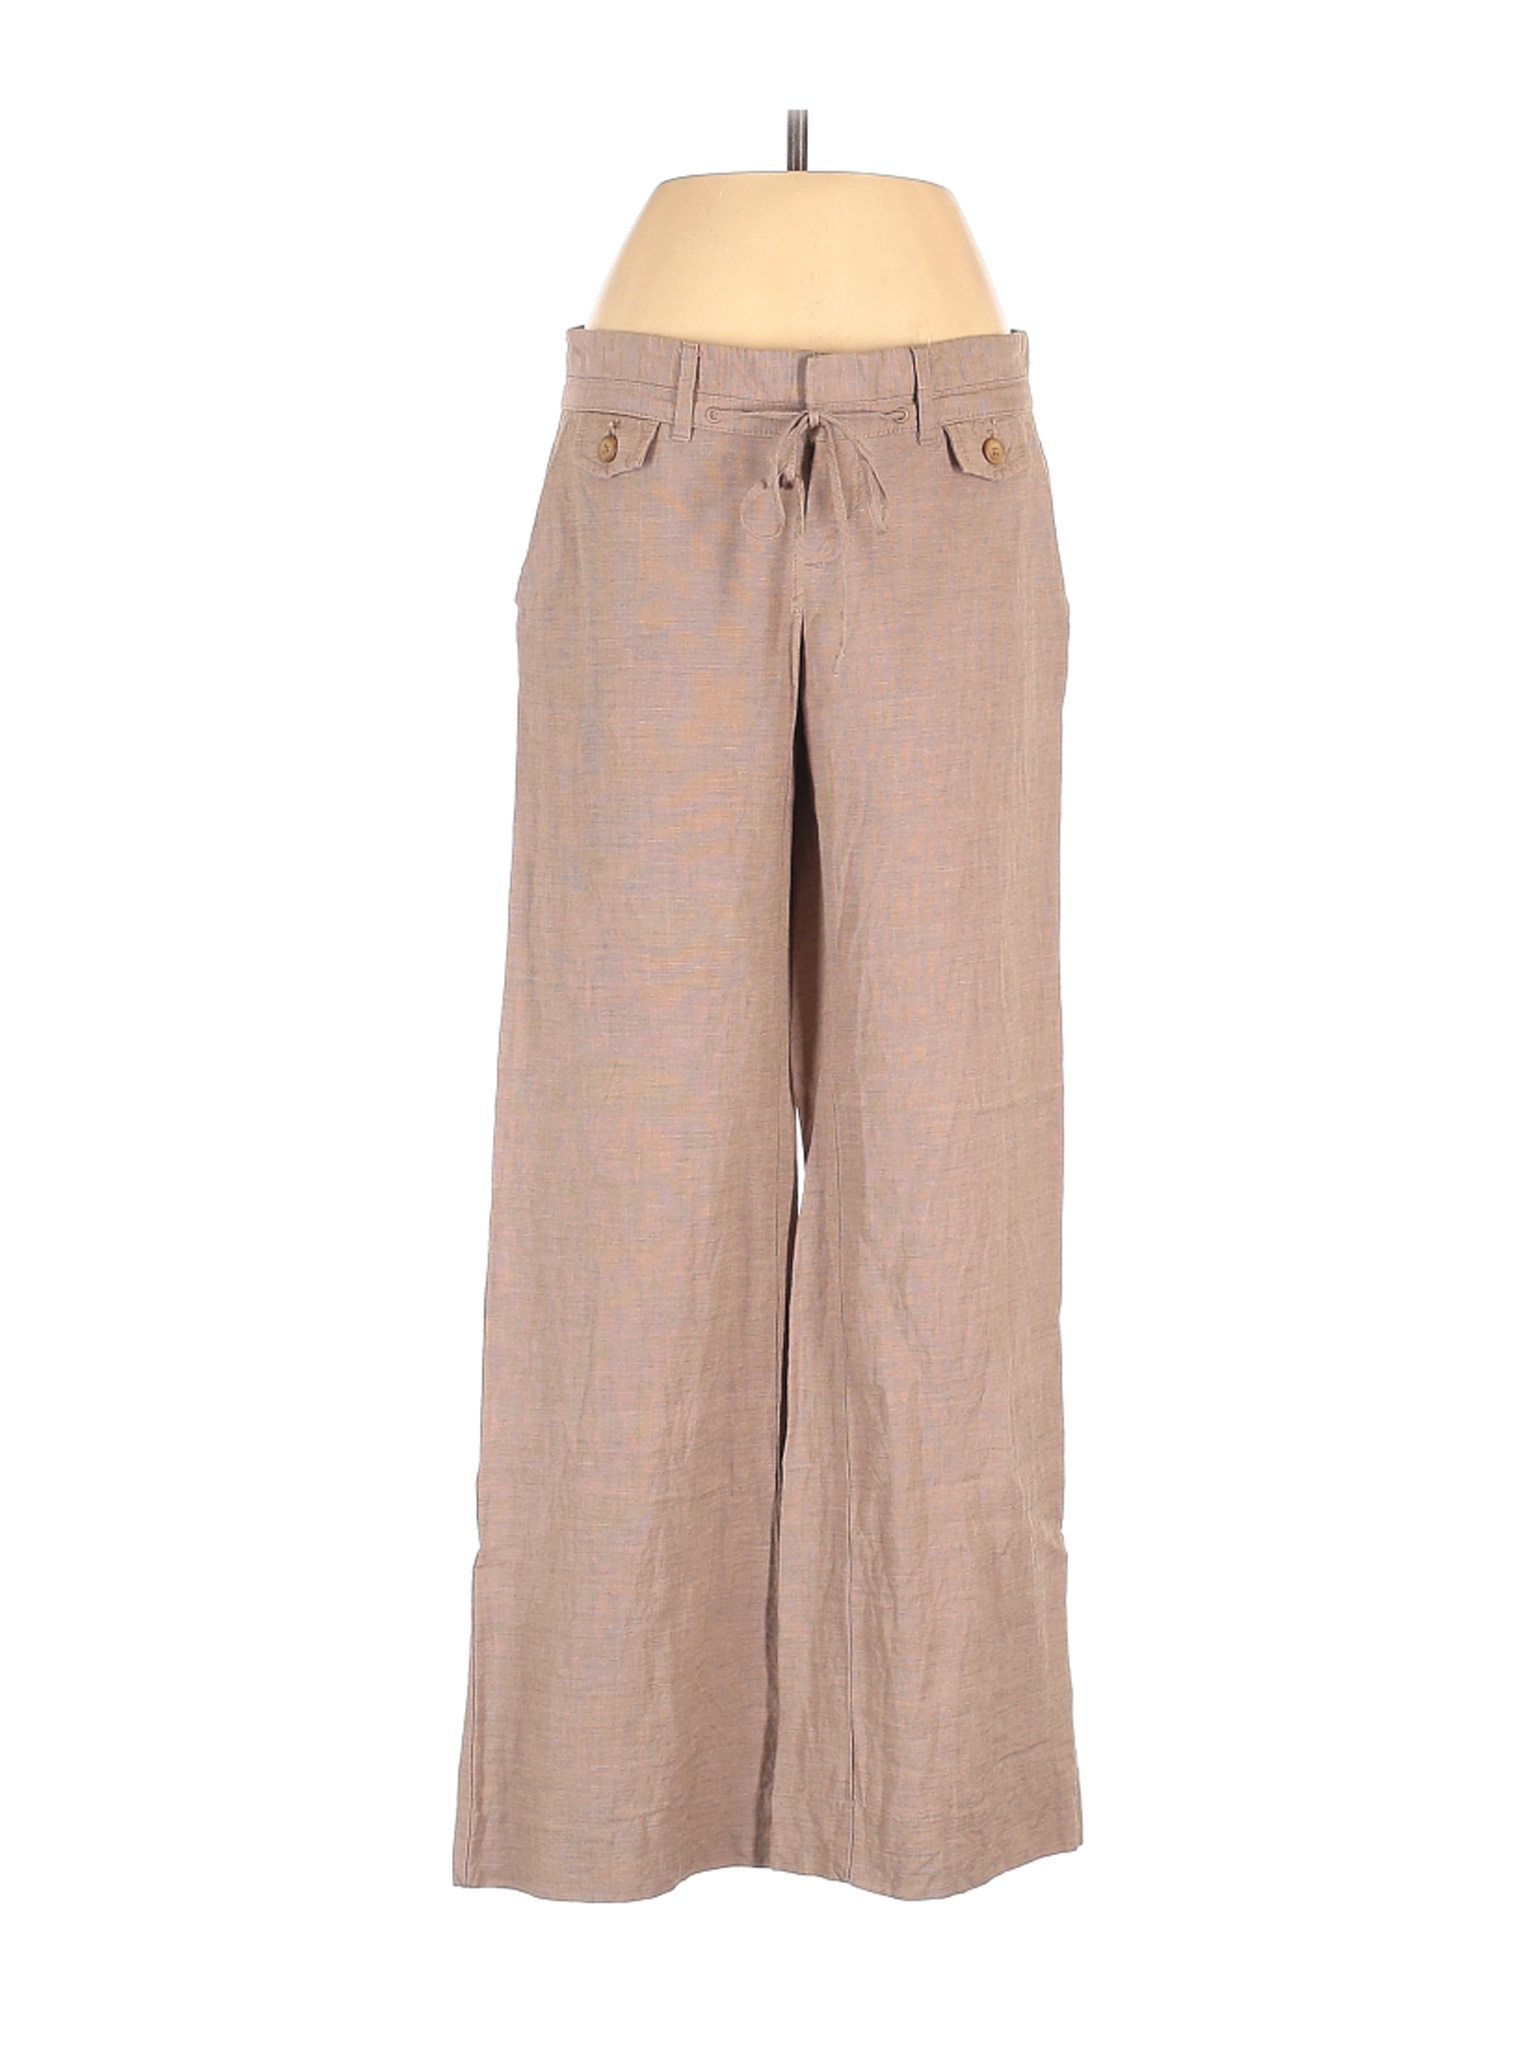 Gap Women Brown Linen Pants 0 Petites | eBay